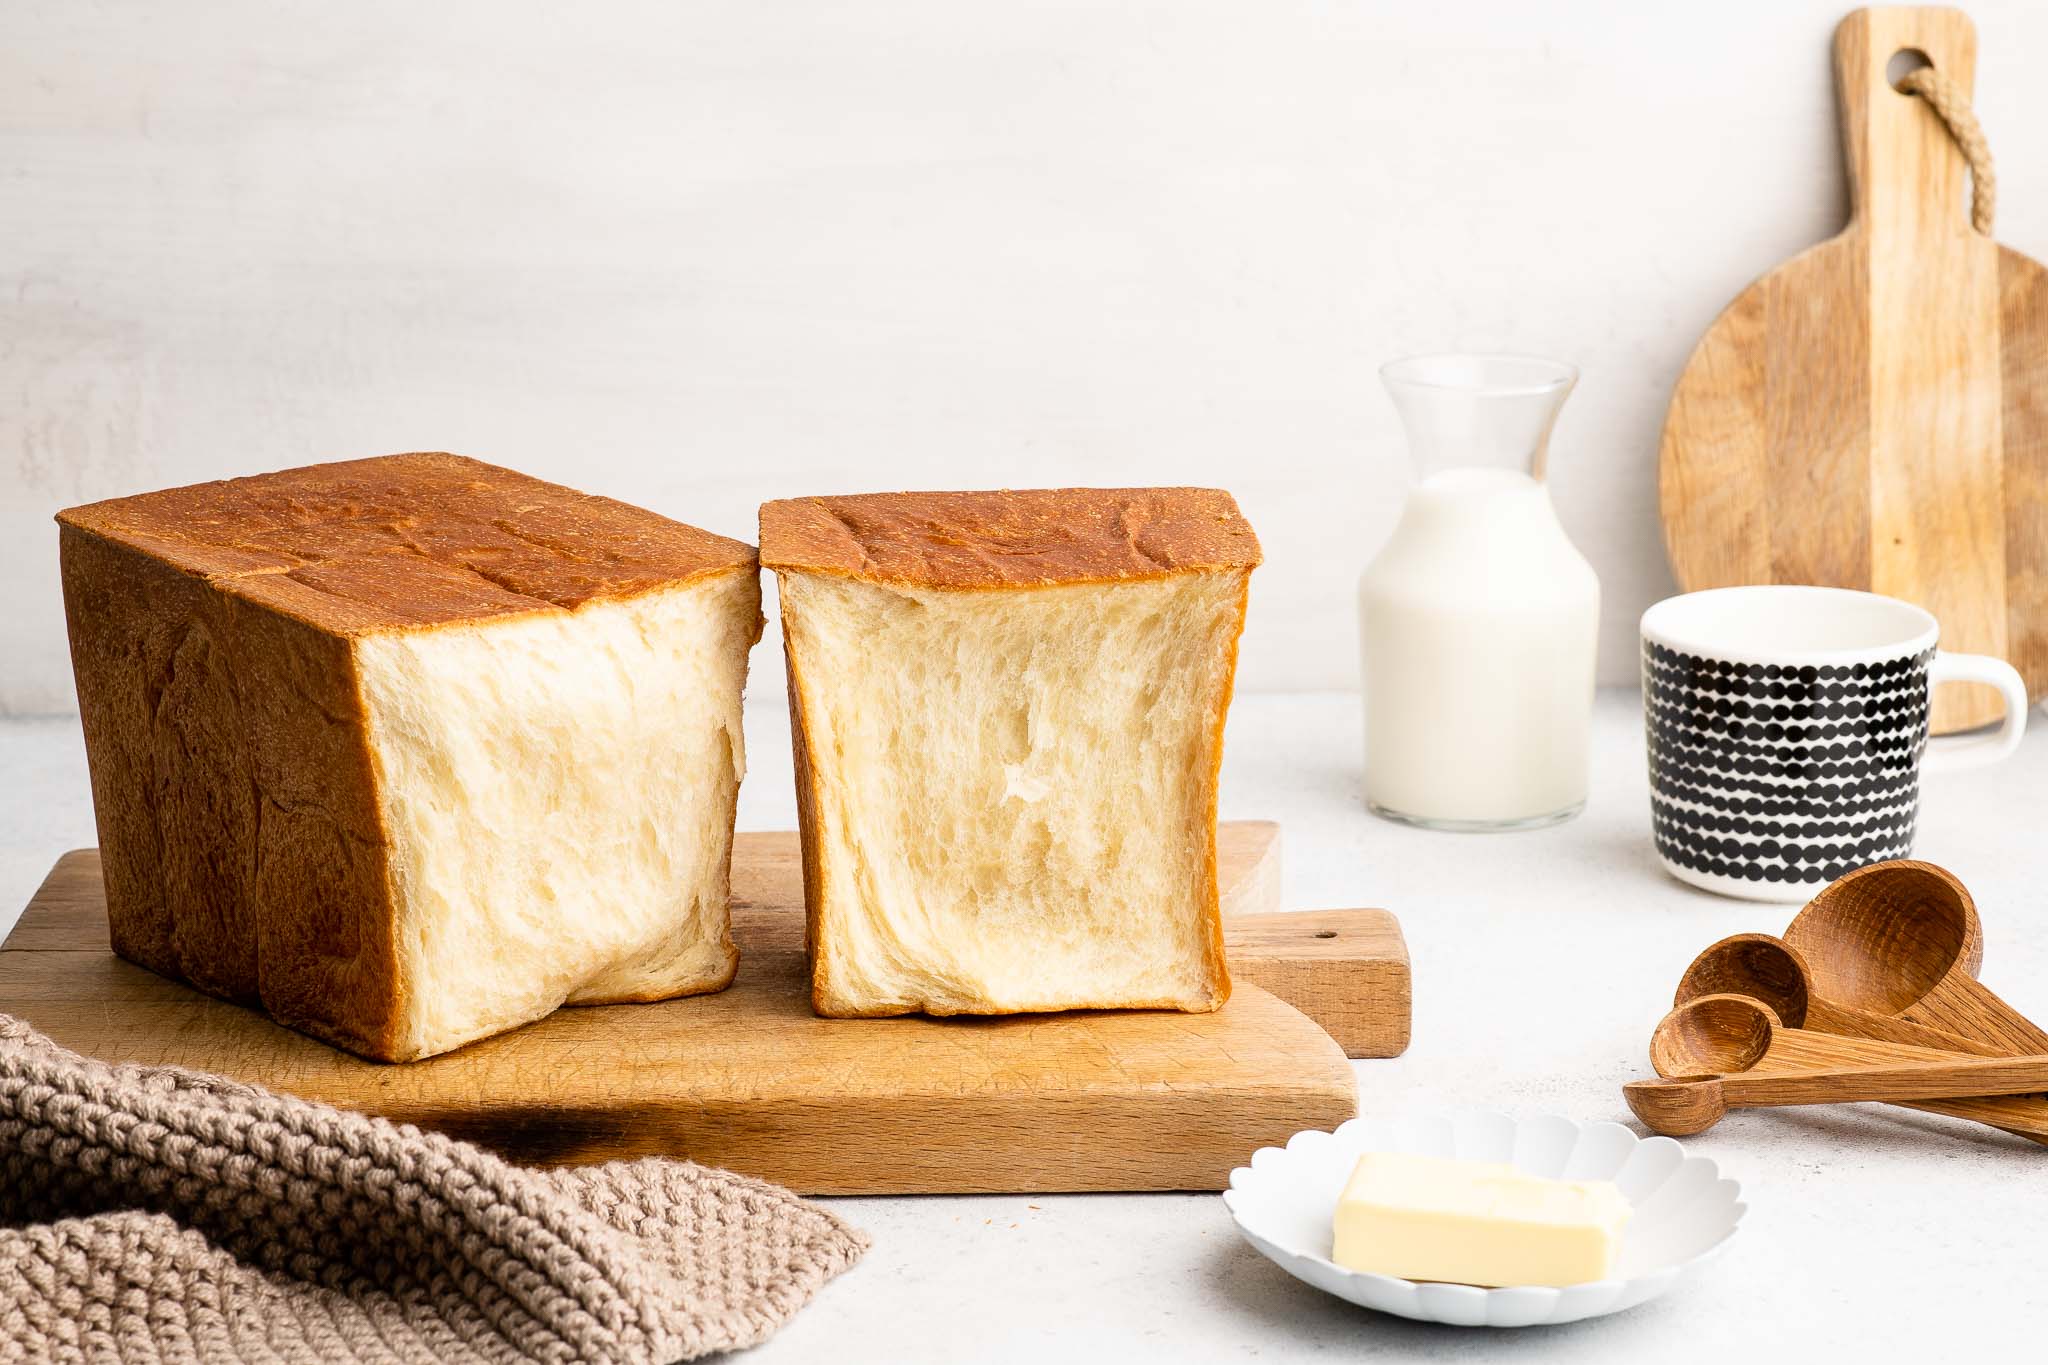 japanese milk bread loaf baked in pullman loaf pan on wooden board